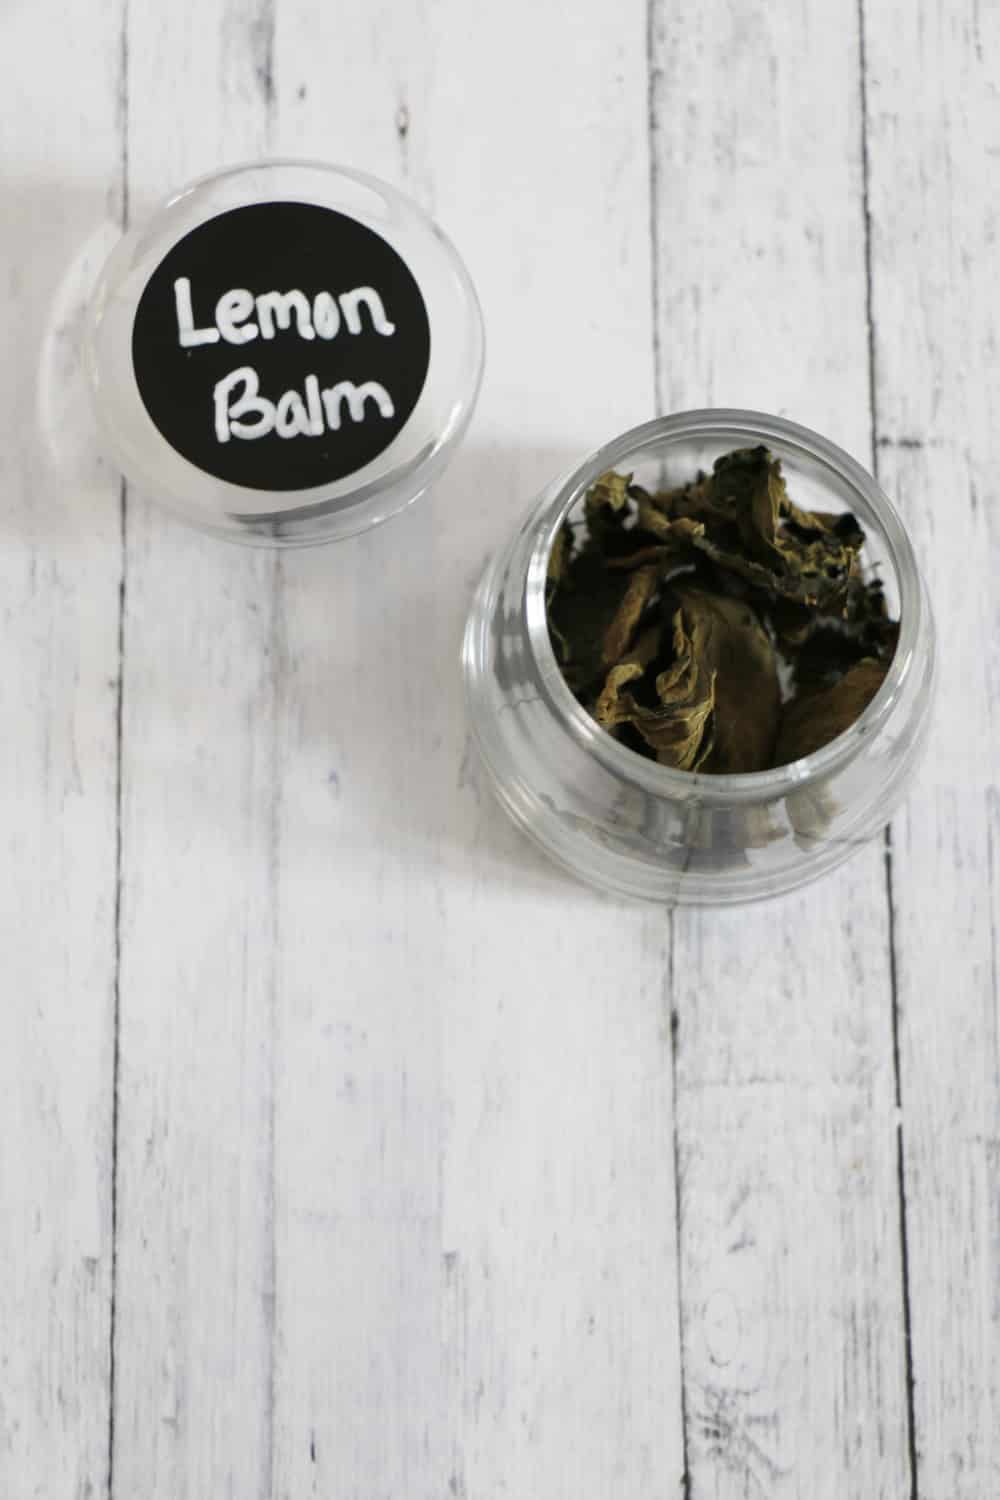 How To Dry Herbs - Lemon Balm